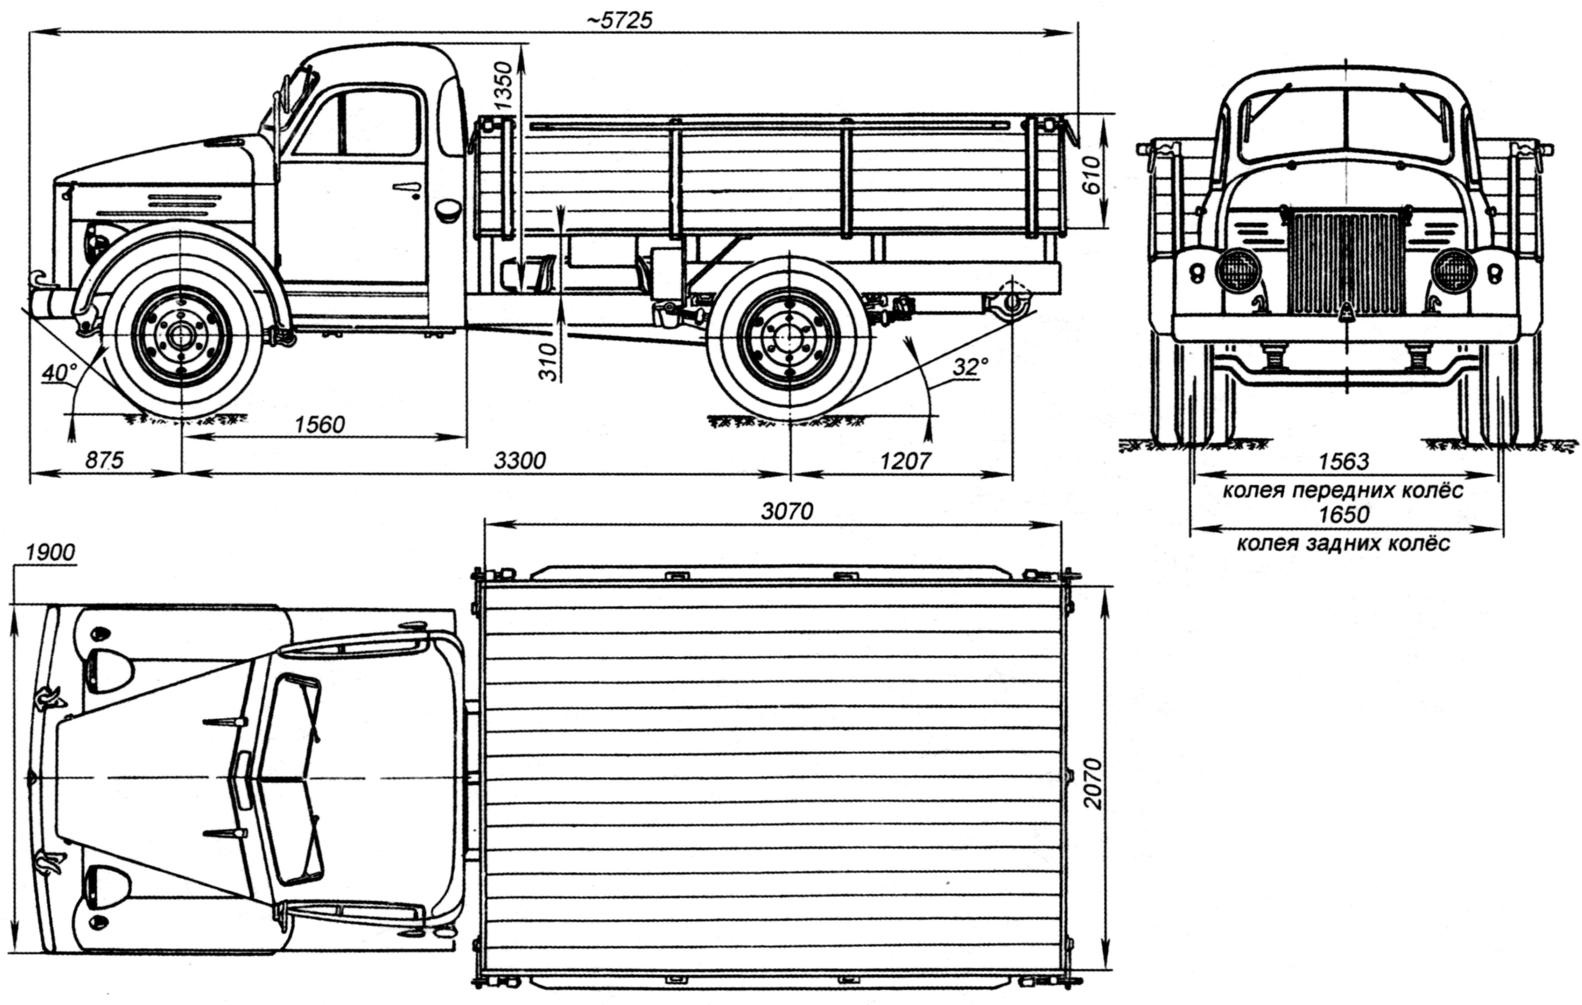 Truck Gorky automobile plant GAZ-51 AND